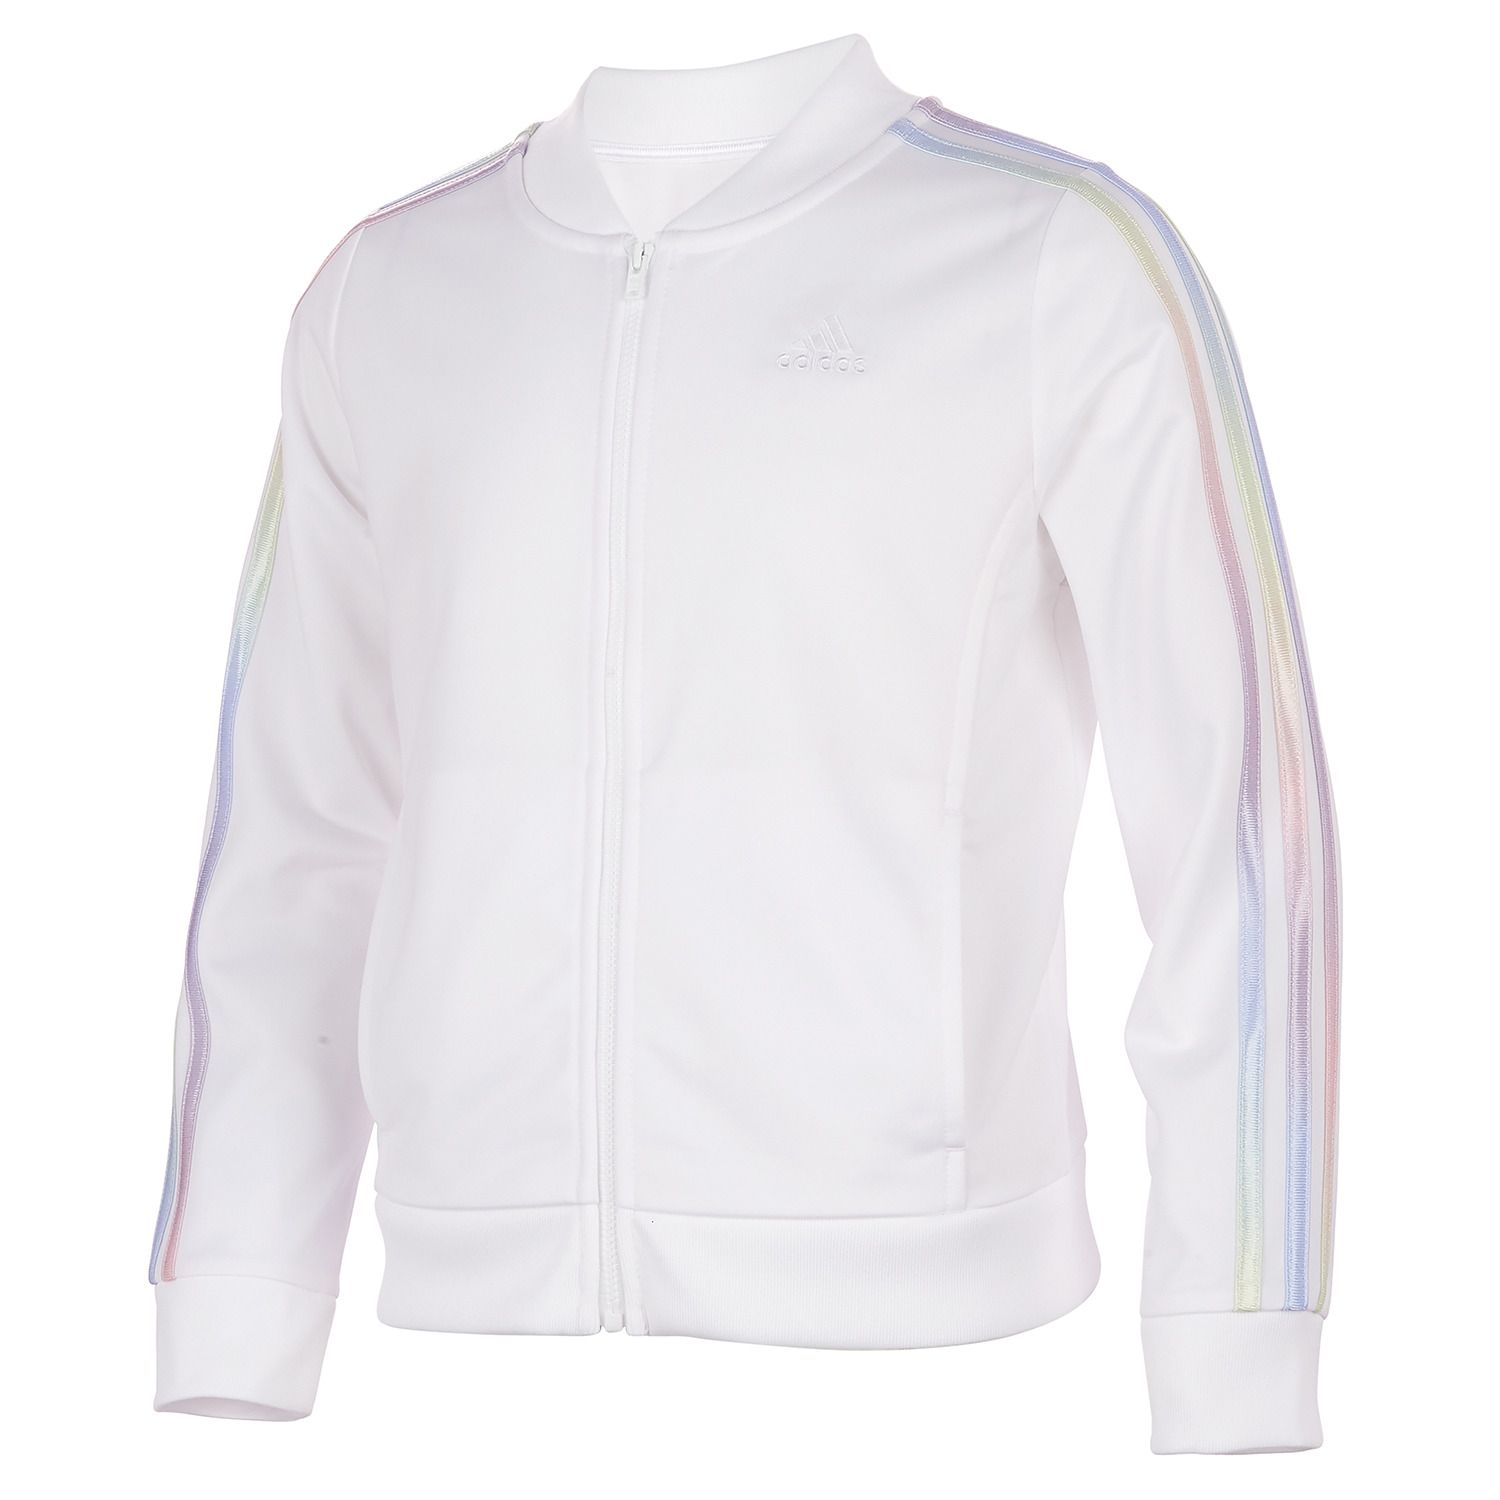 iridescent jacket adidas